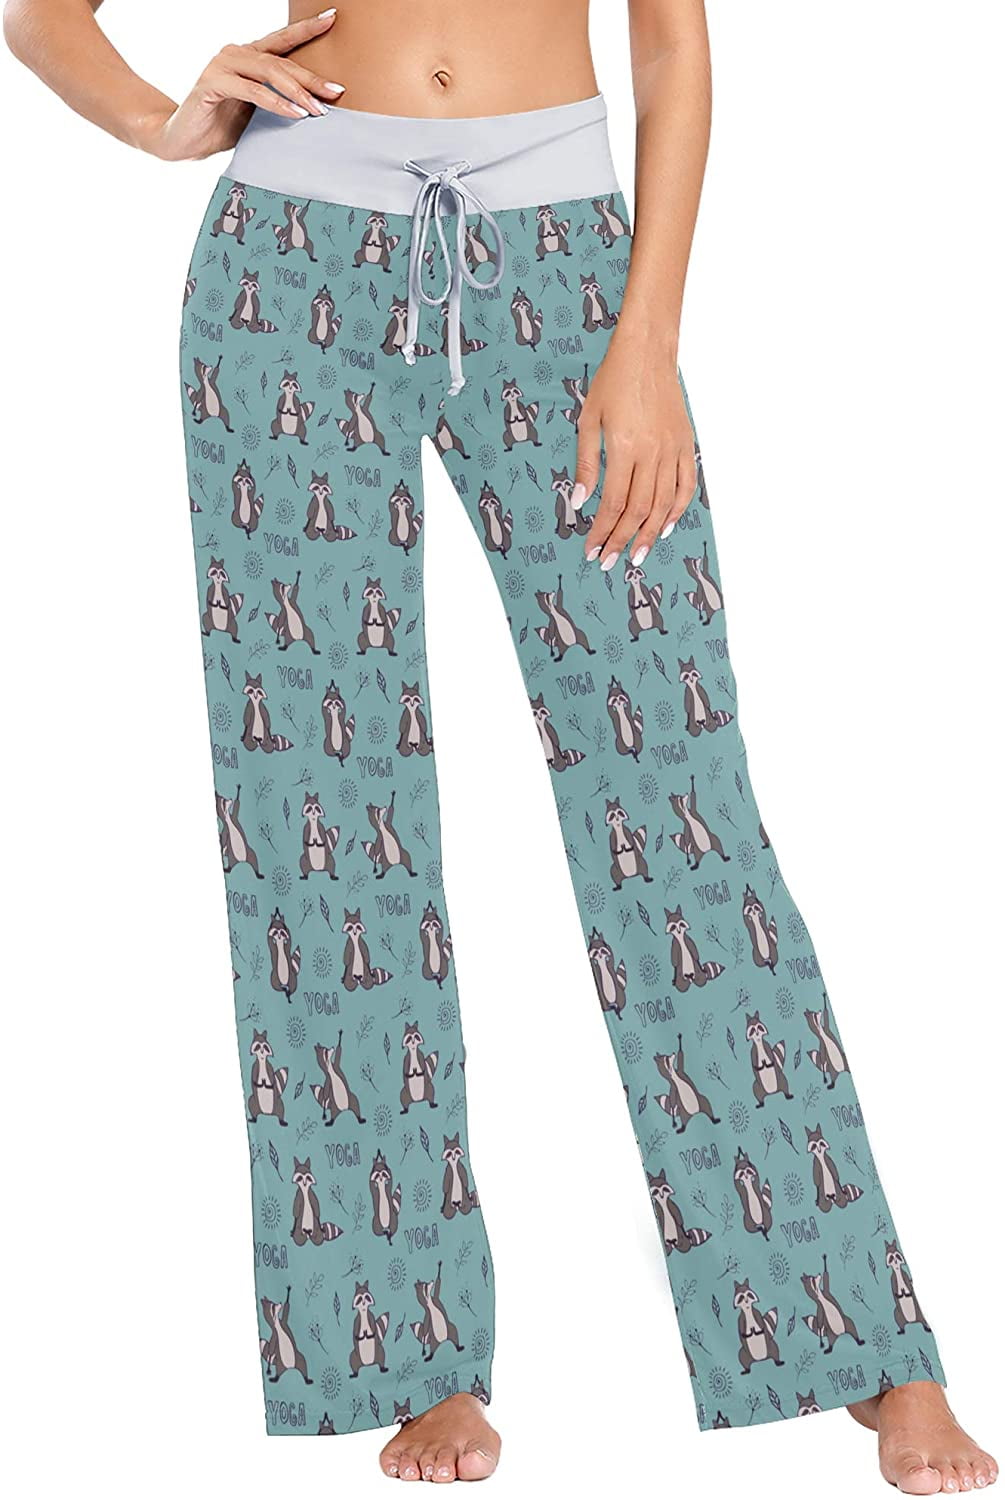 Pongfunsy Womens Comfy Casual Pajama Pants Floral Print Drawstring Palazzo Lounge Pants Wide Leg Yoga Pants Plus Size 